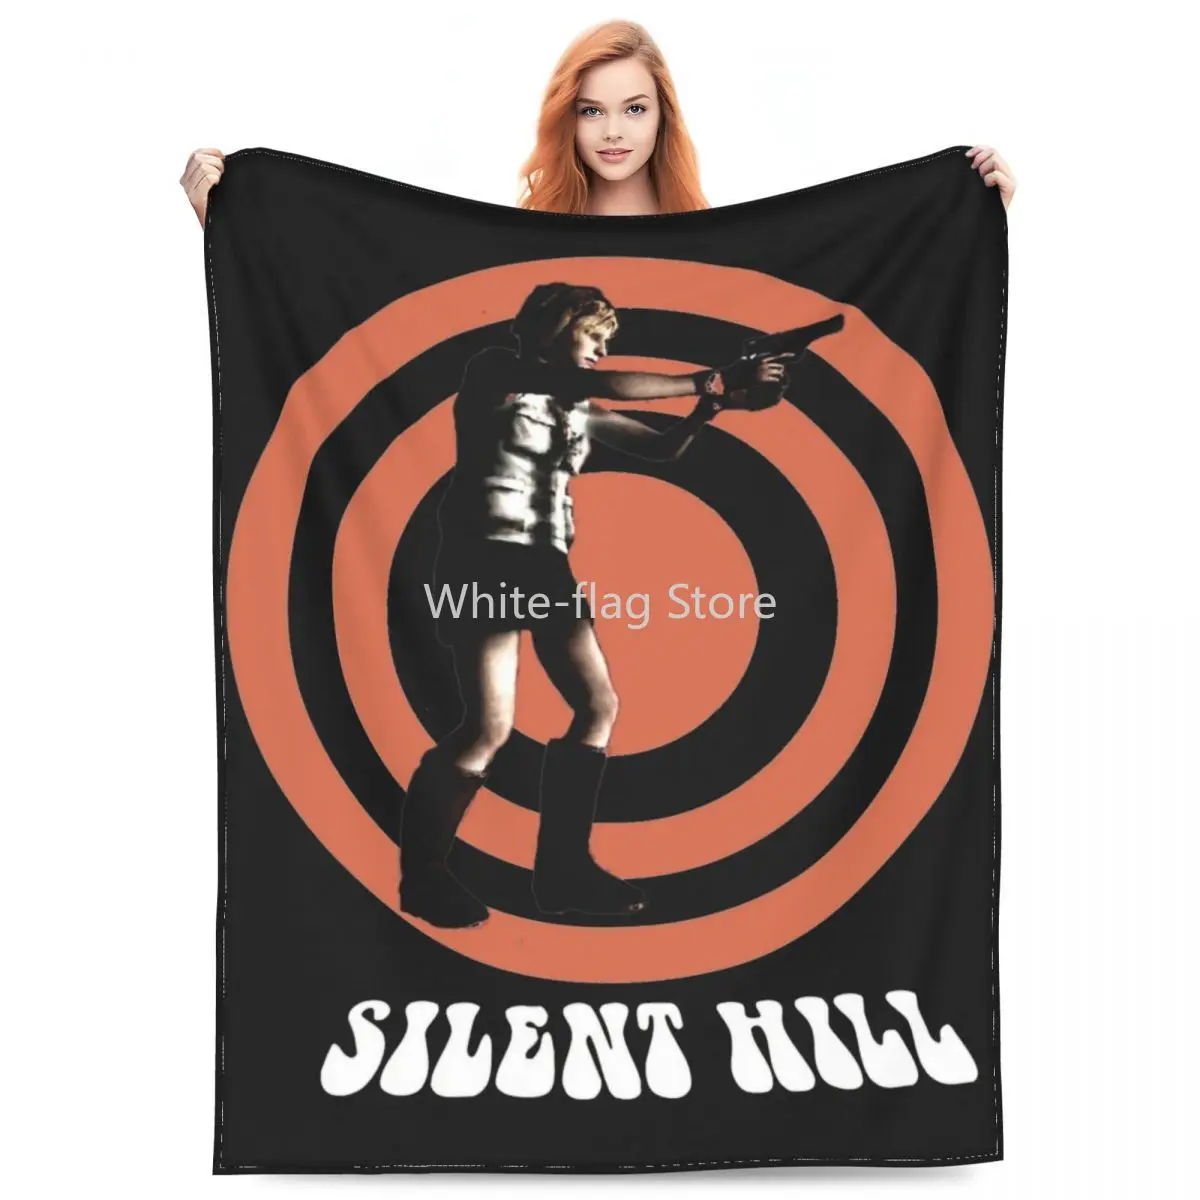 

Comfort Heather Silent Hill 3 Blanket Merch Bedding Decorative Horror Game Blanket Throw Lightweight Fleece for Car